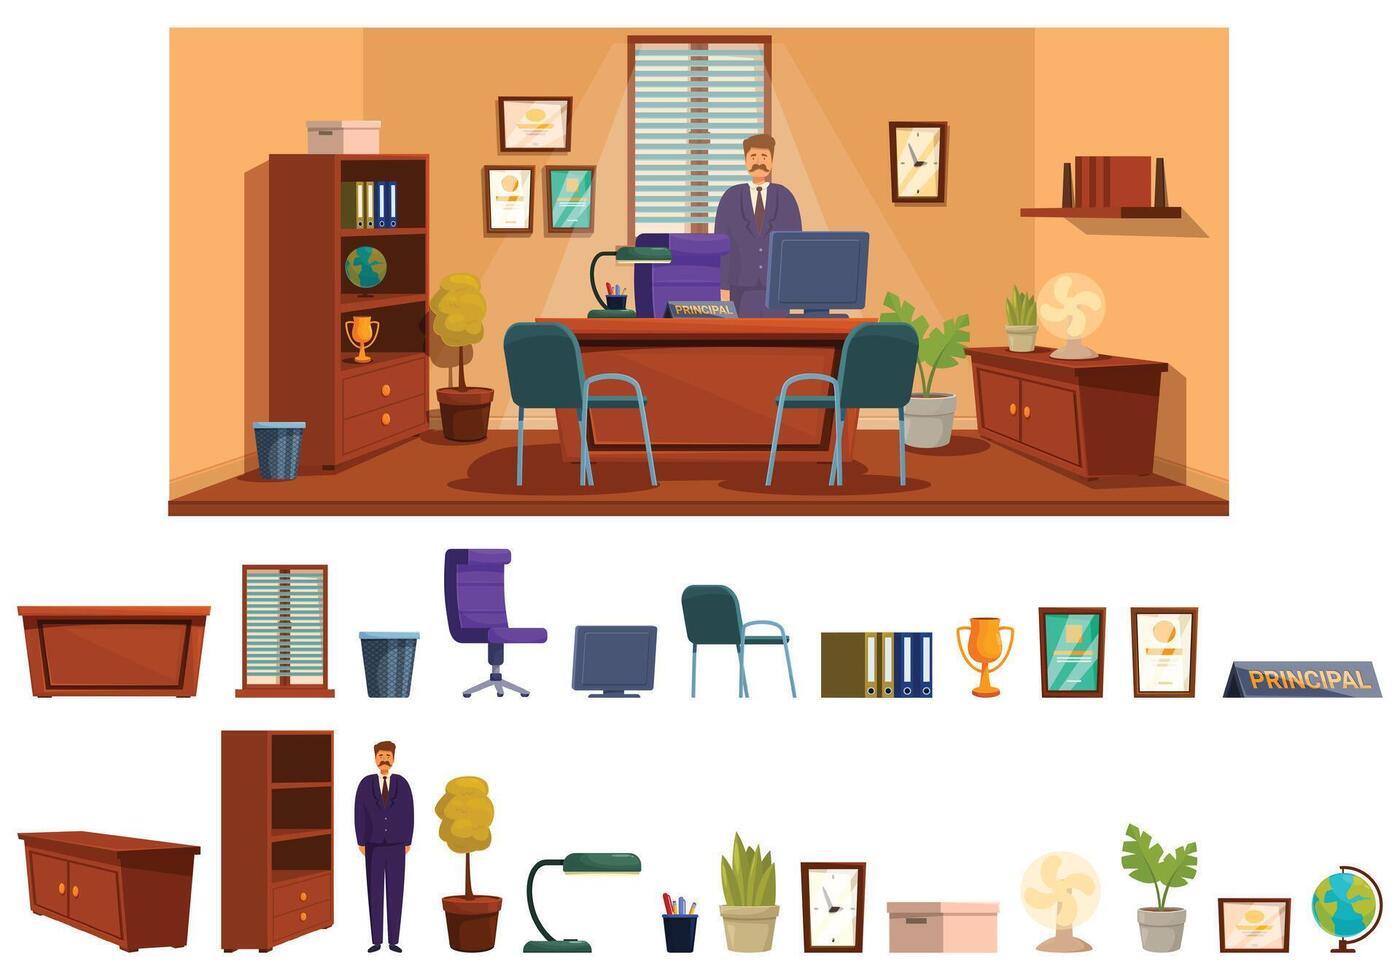 School principal office room icons set cartoon vector. Workplace furniture vector